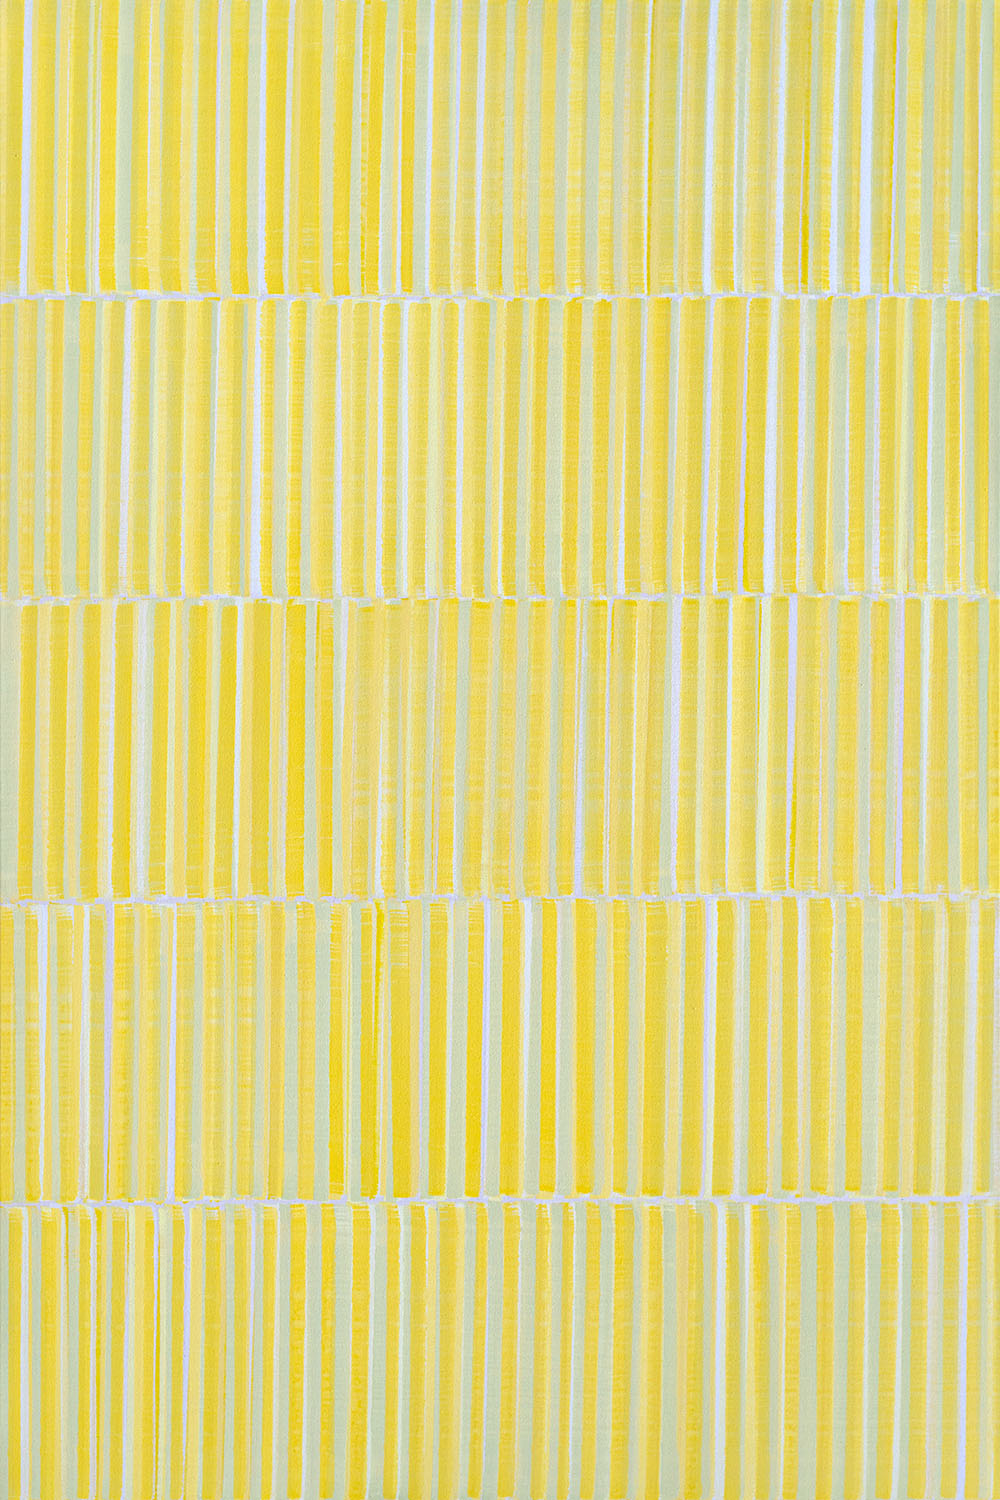 Nikola Dimitrov, FarbraumGelb IV, 2019, Pigmente, Bindemittel auf Leinwand, 150 × 100 cm